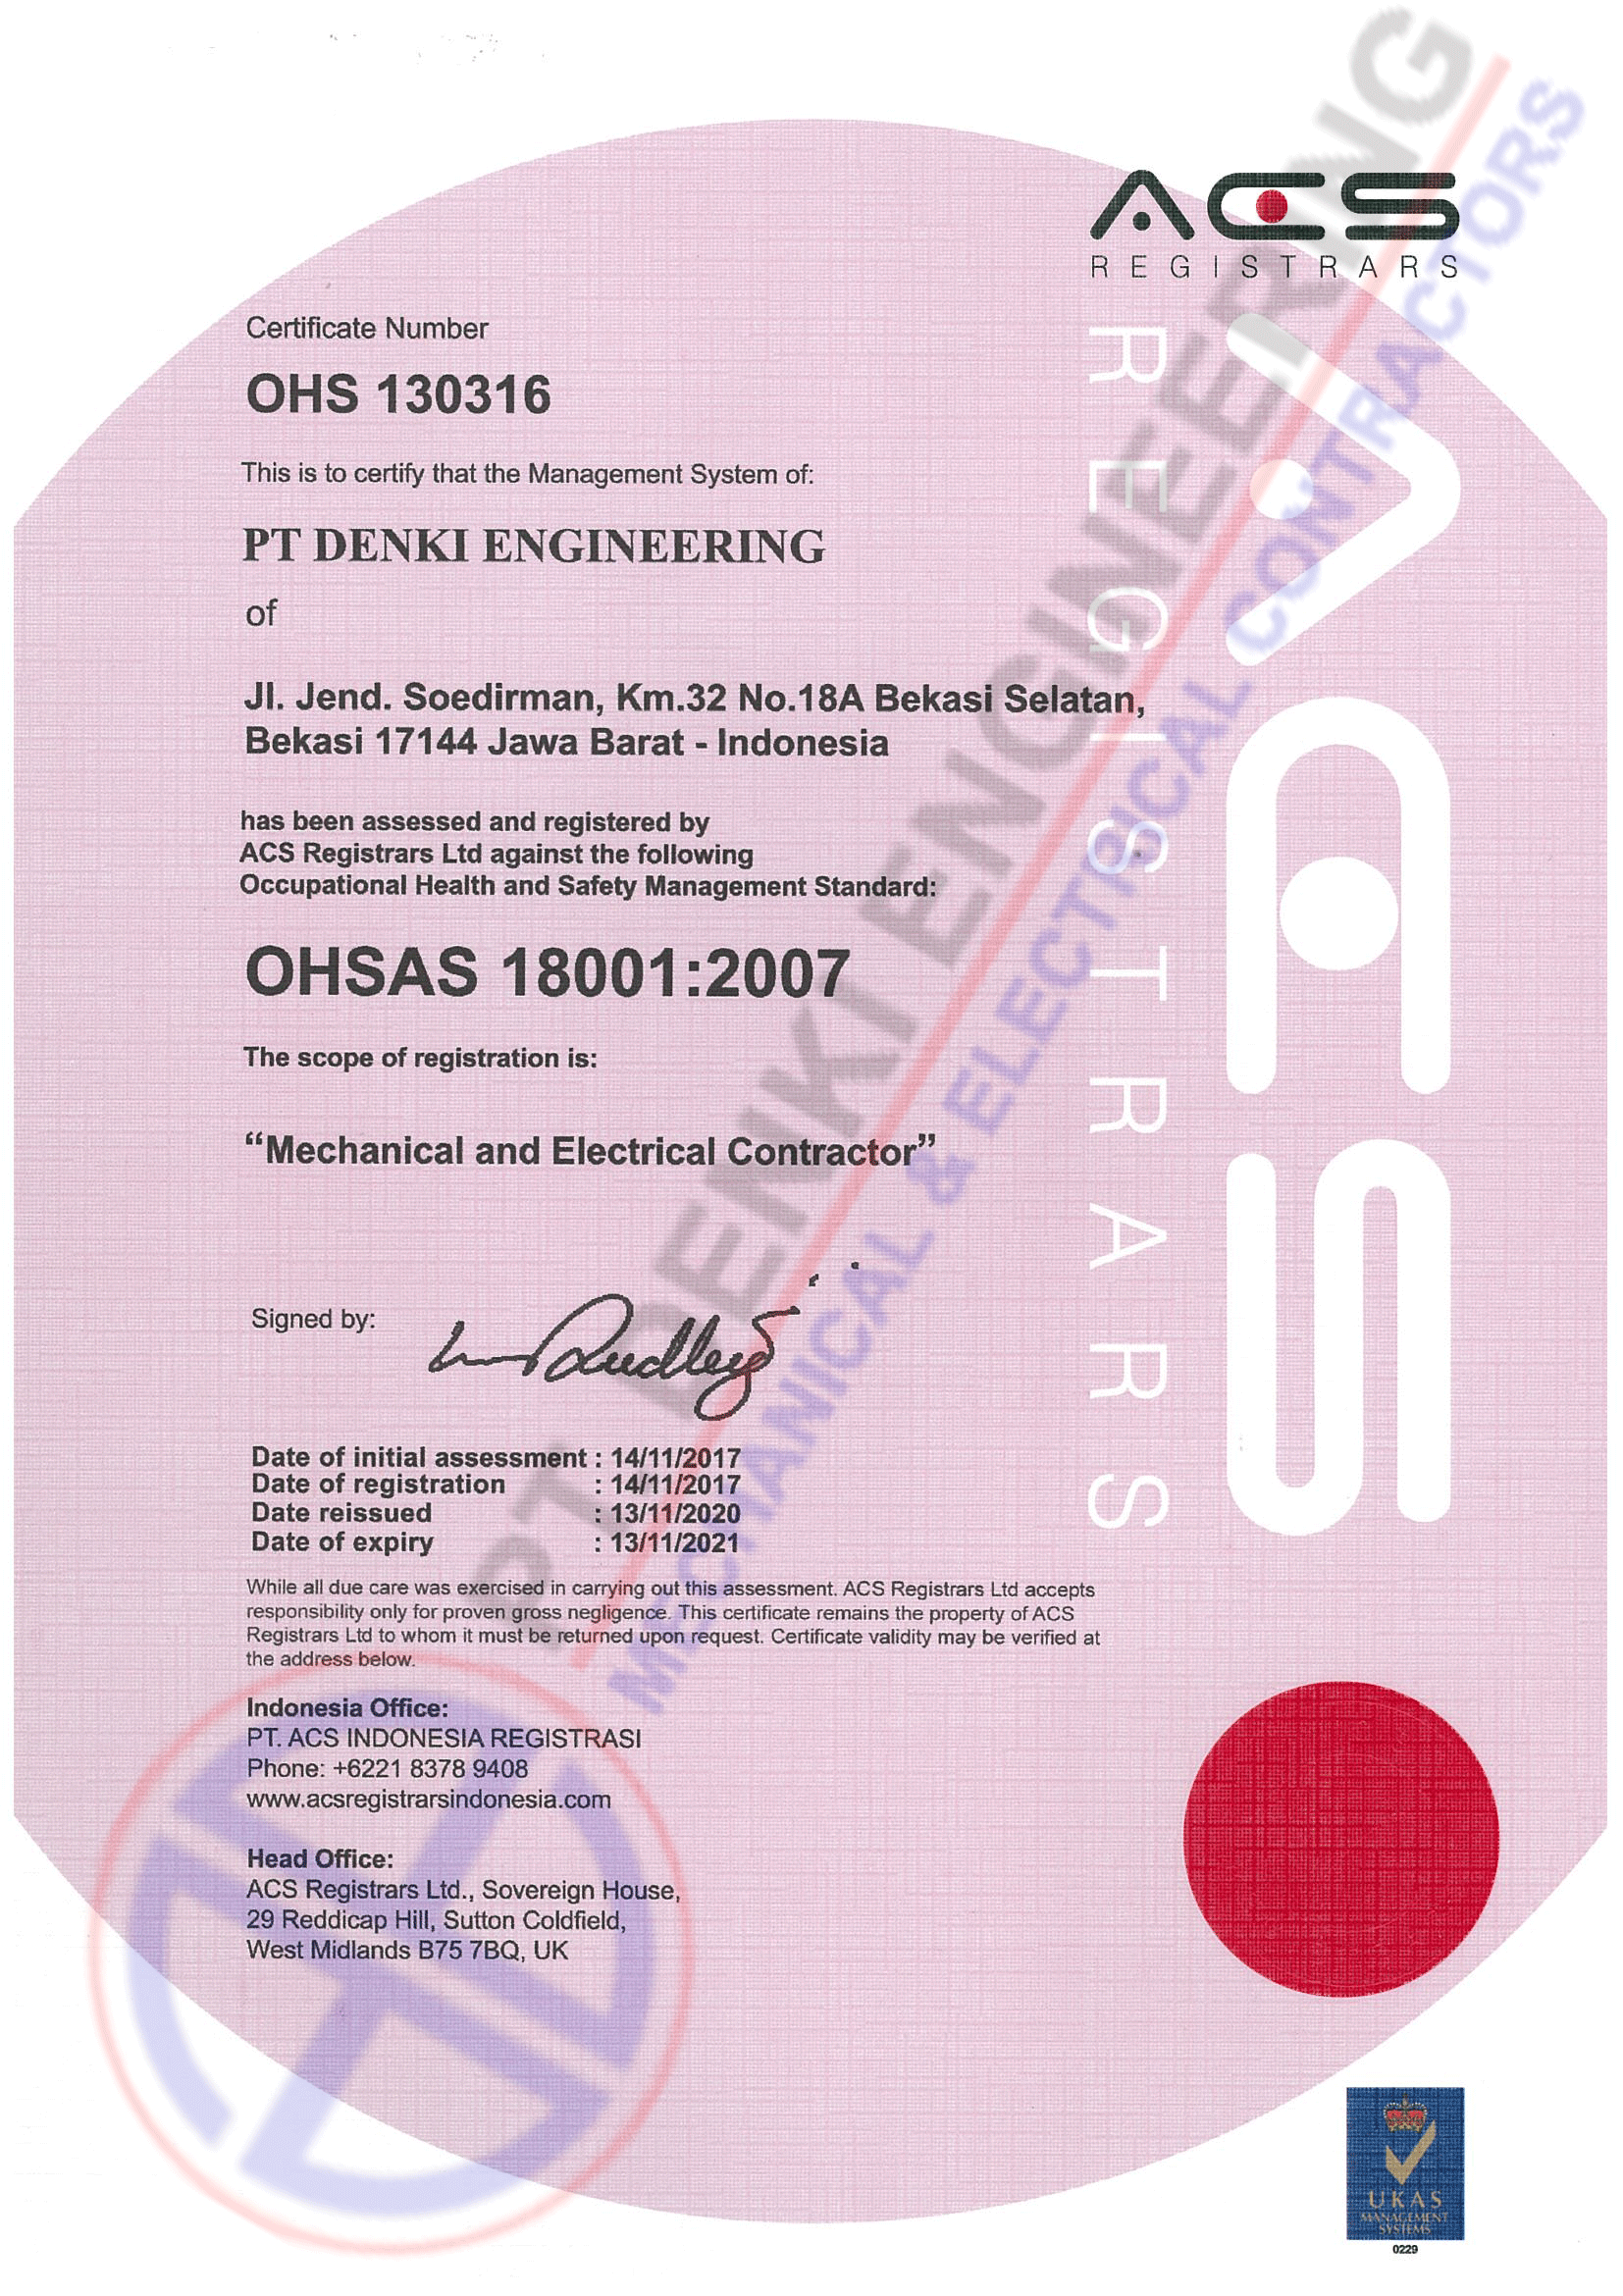 OHSAS Certificate